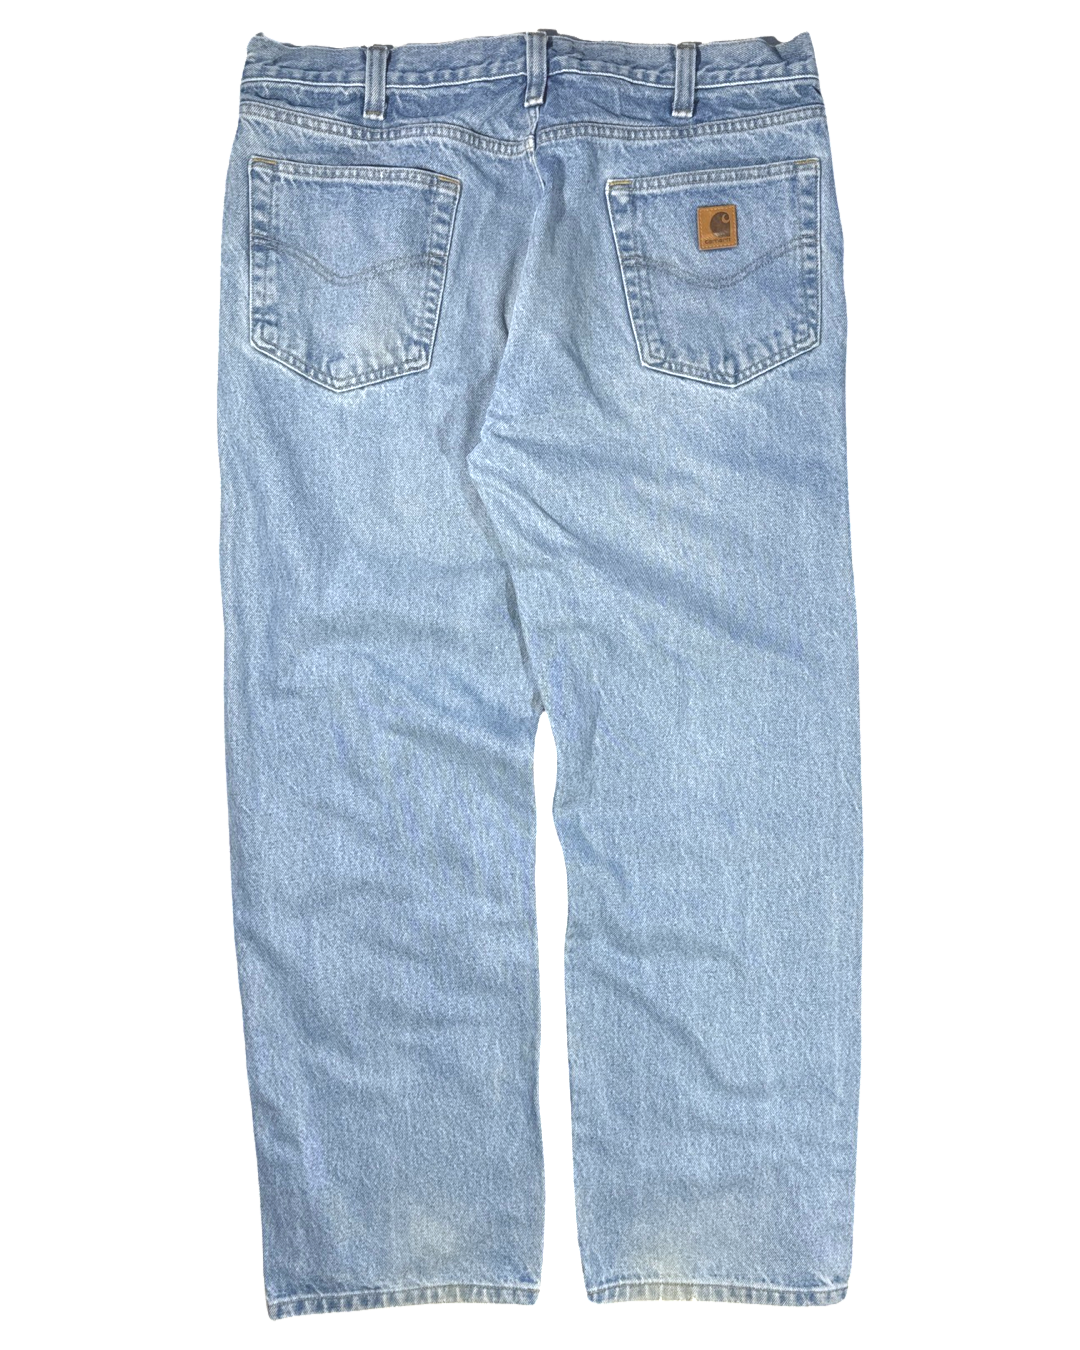 Vintage Carhartt Jeans - 35"